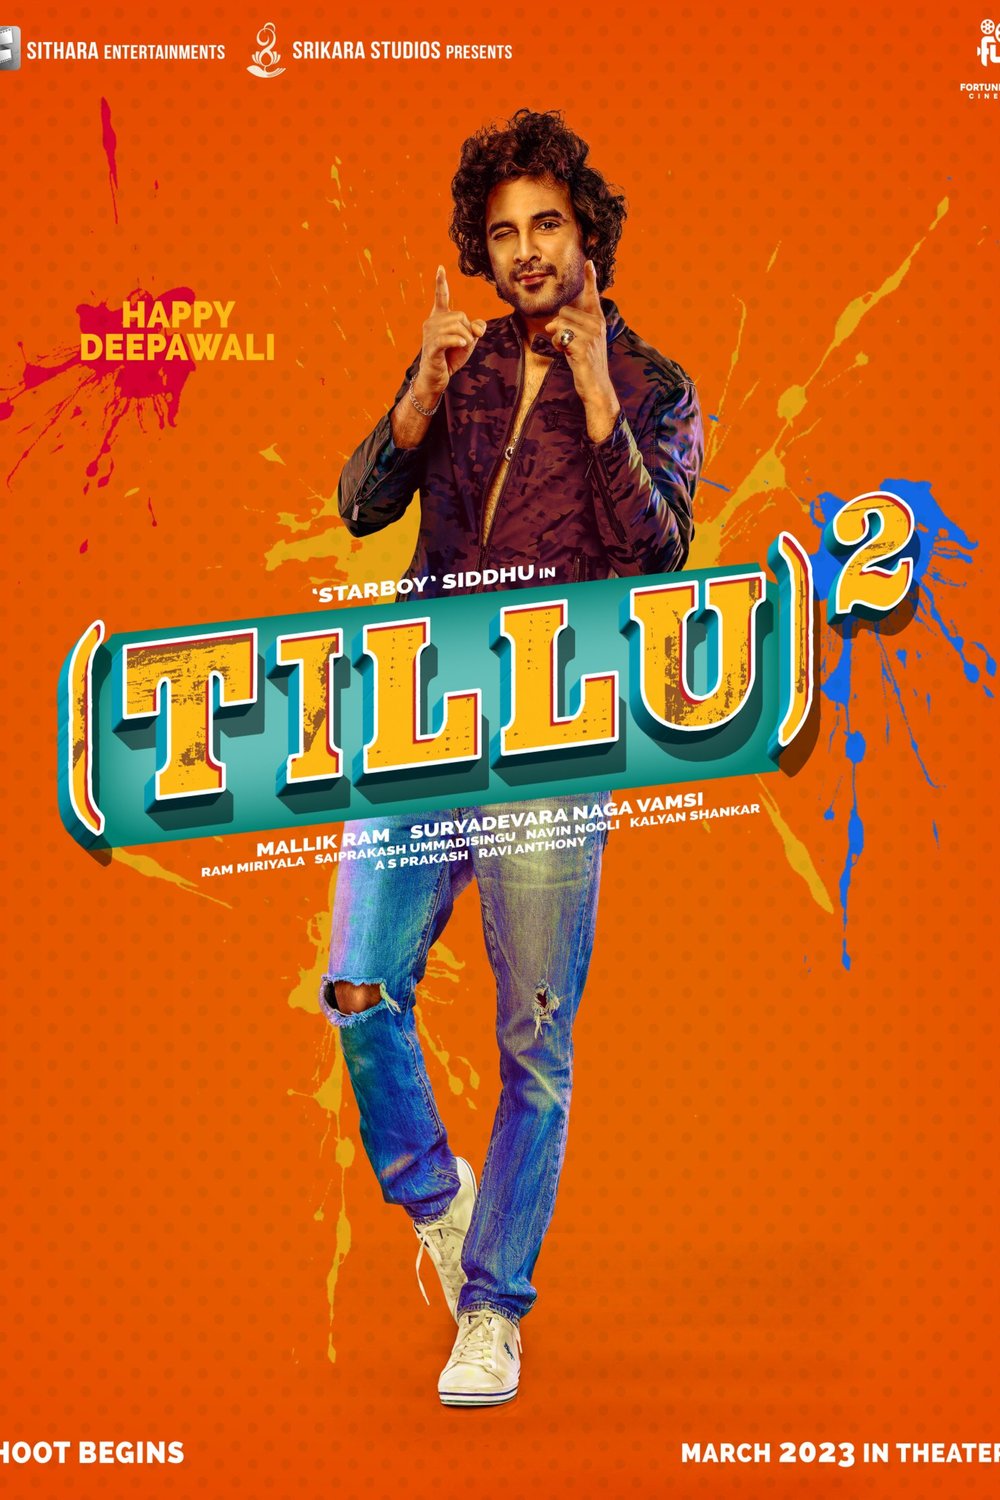 L'affiche originale du film Tillu² en Telugu